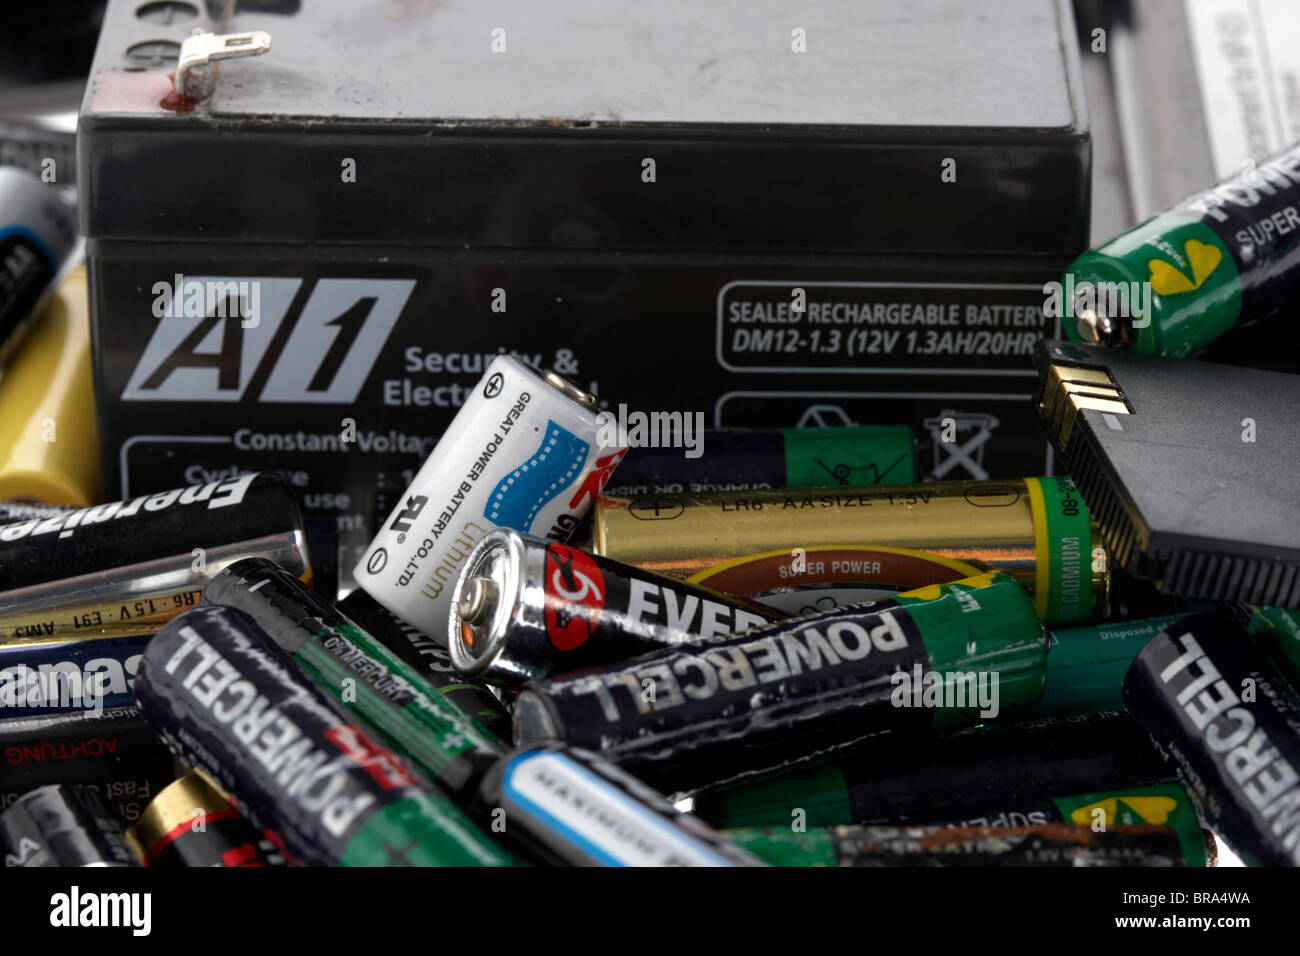 https://c8.alamy.com/comp/BRA4WA/pile-of-used-batteries-for-recycling-BRA4WA.jpg